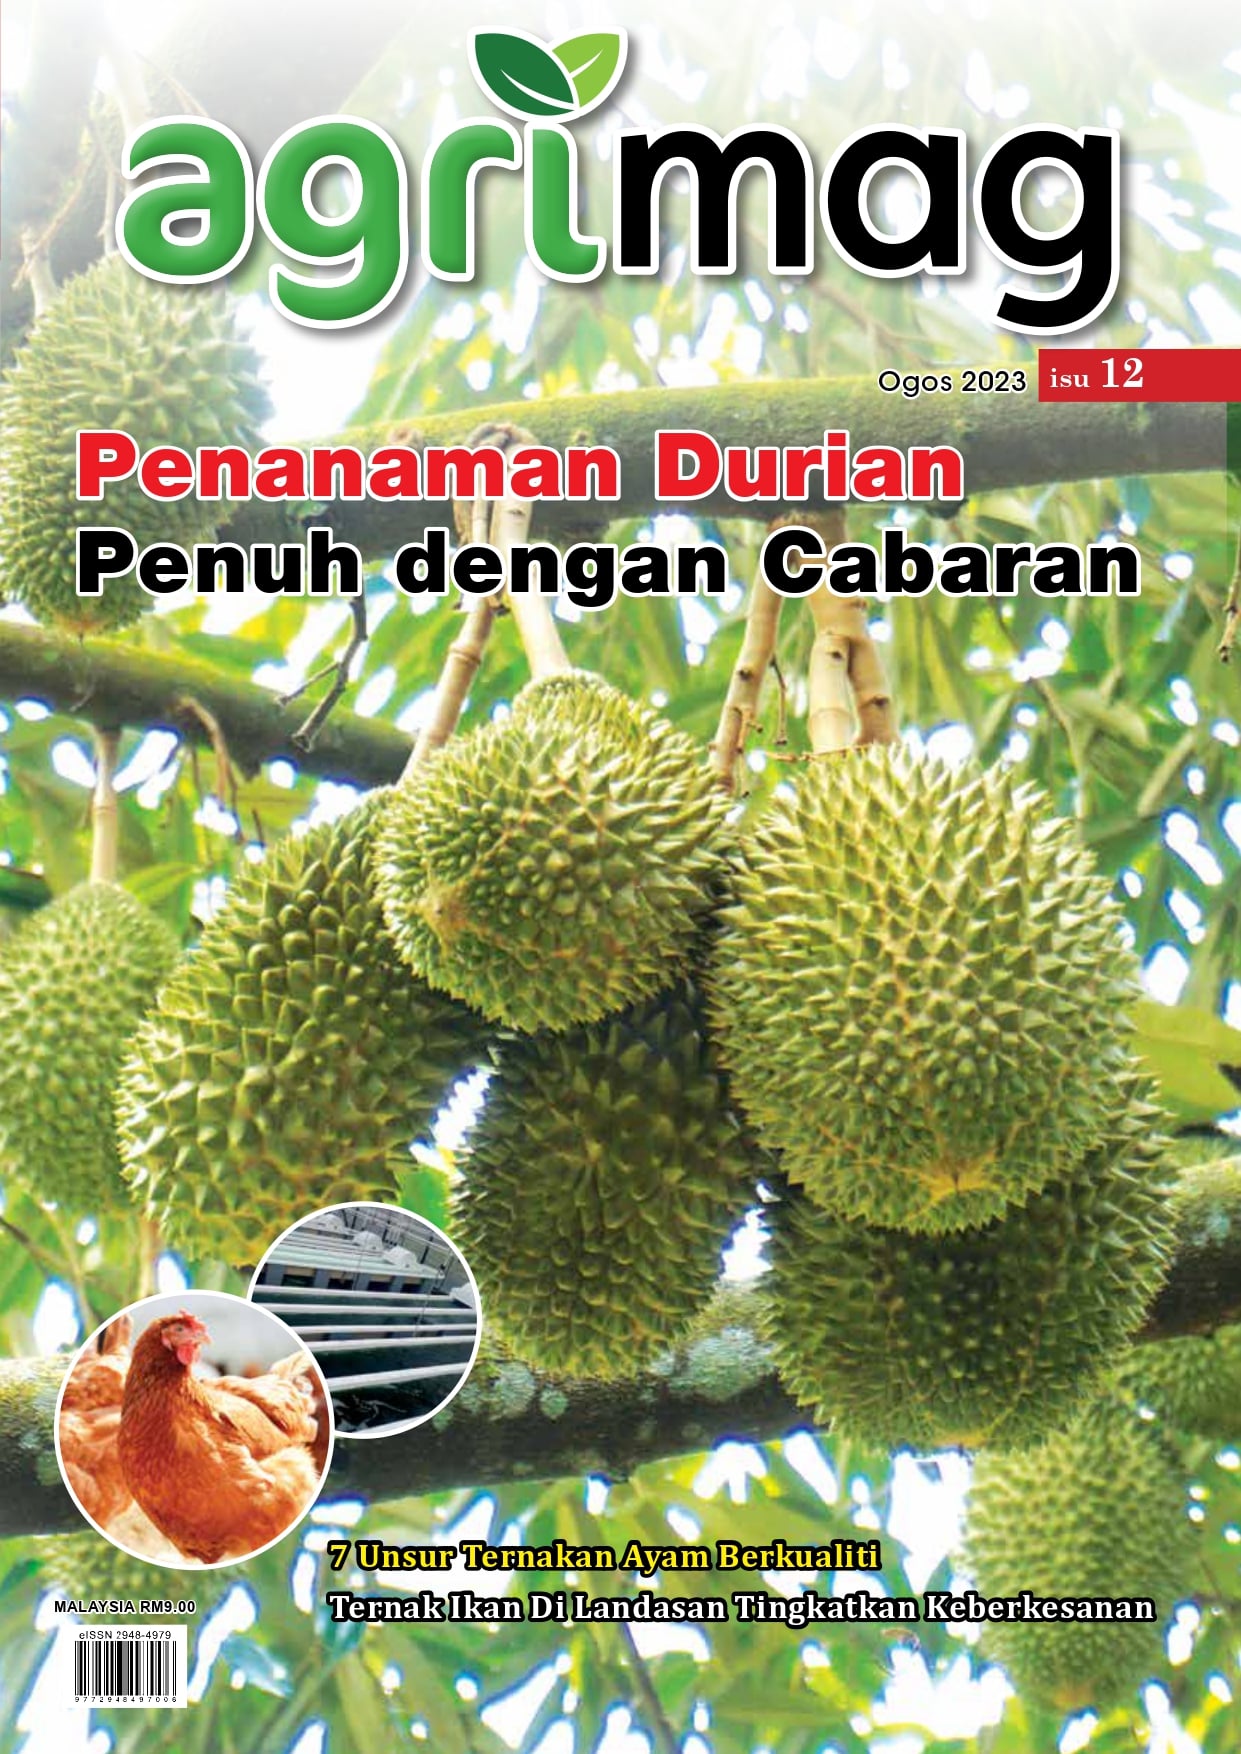 Penanaman Durian Penuh dengan Cabaran (12) - Agrimag